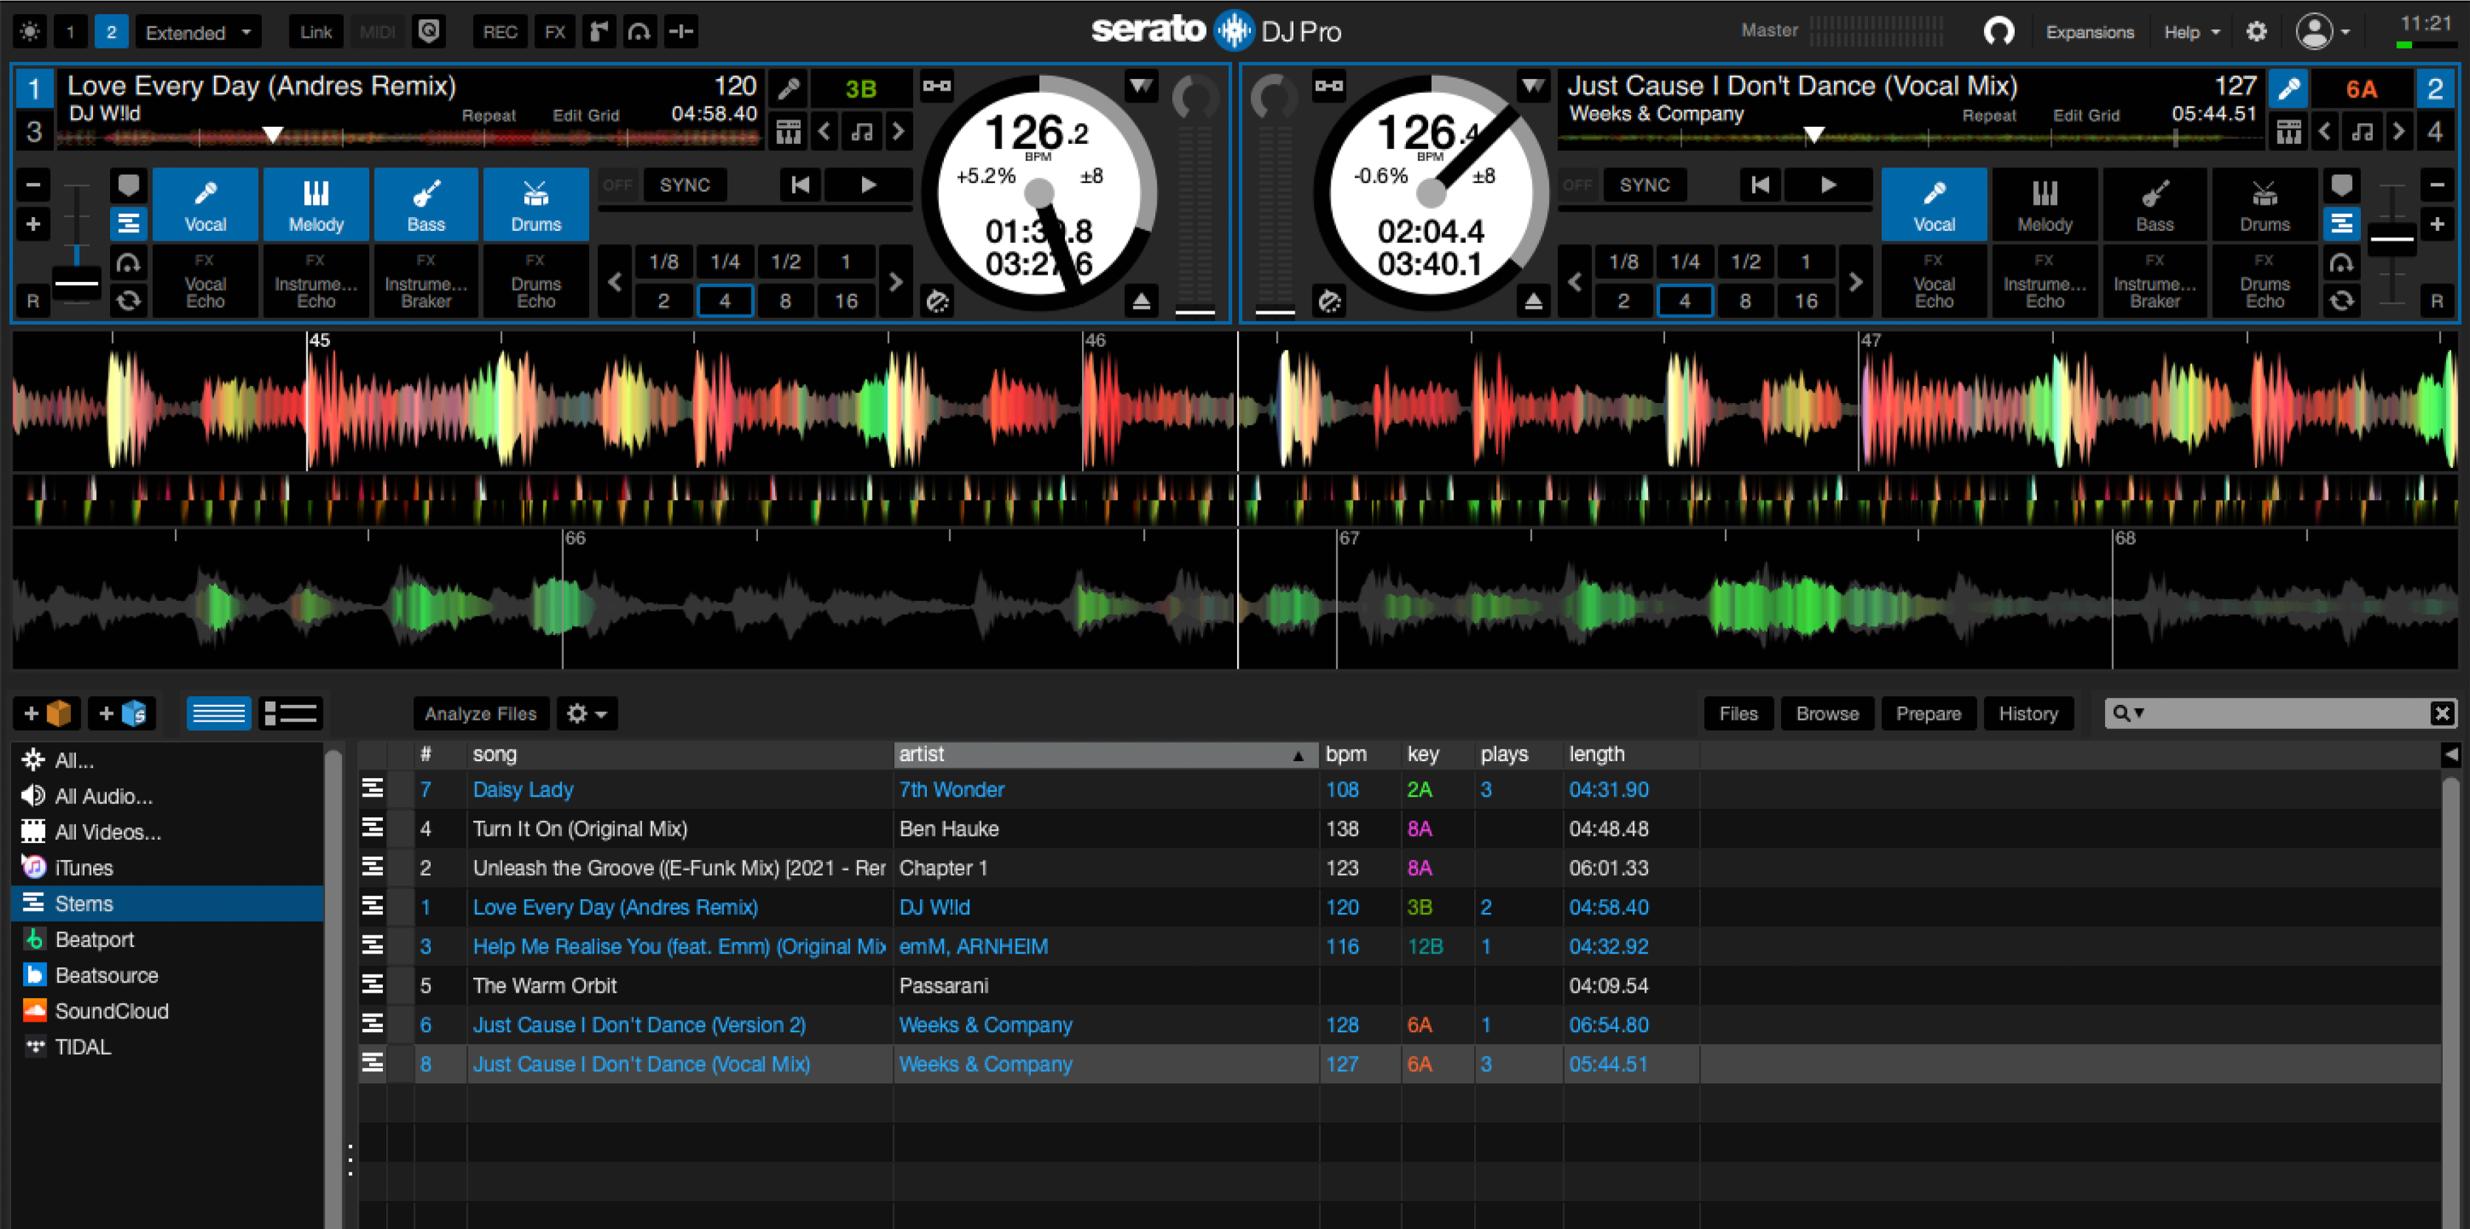 Serato DJ Pro 3.0.12.266 instal the new